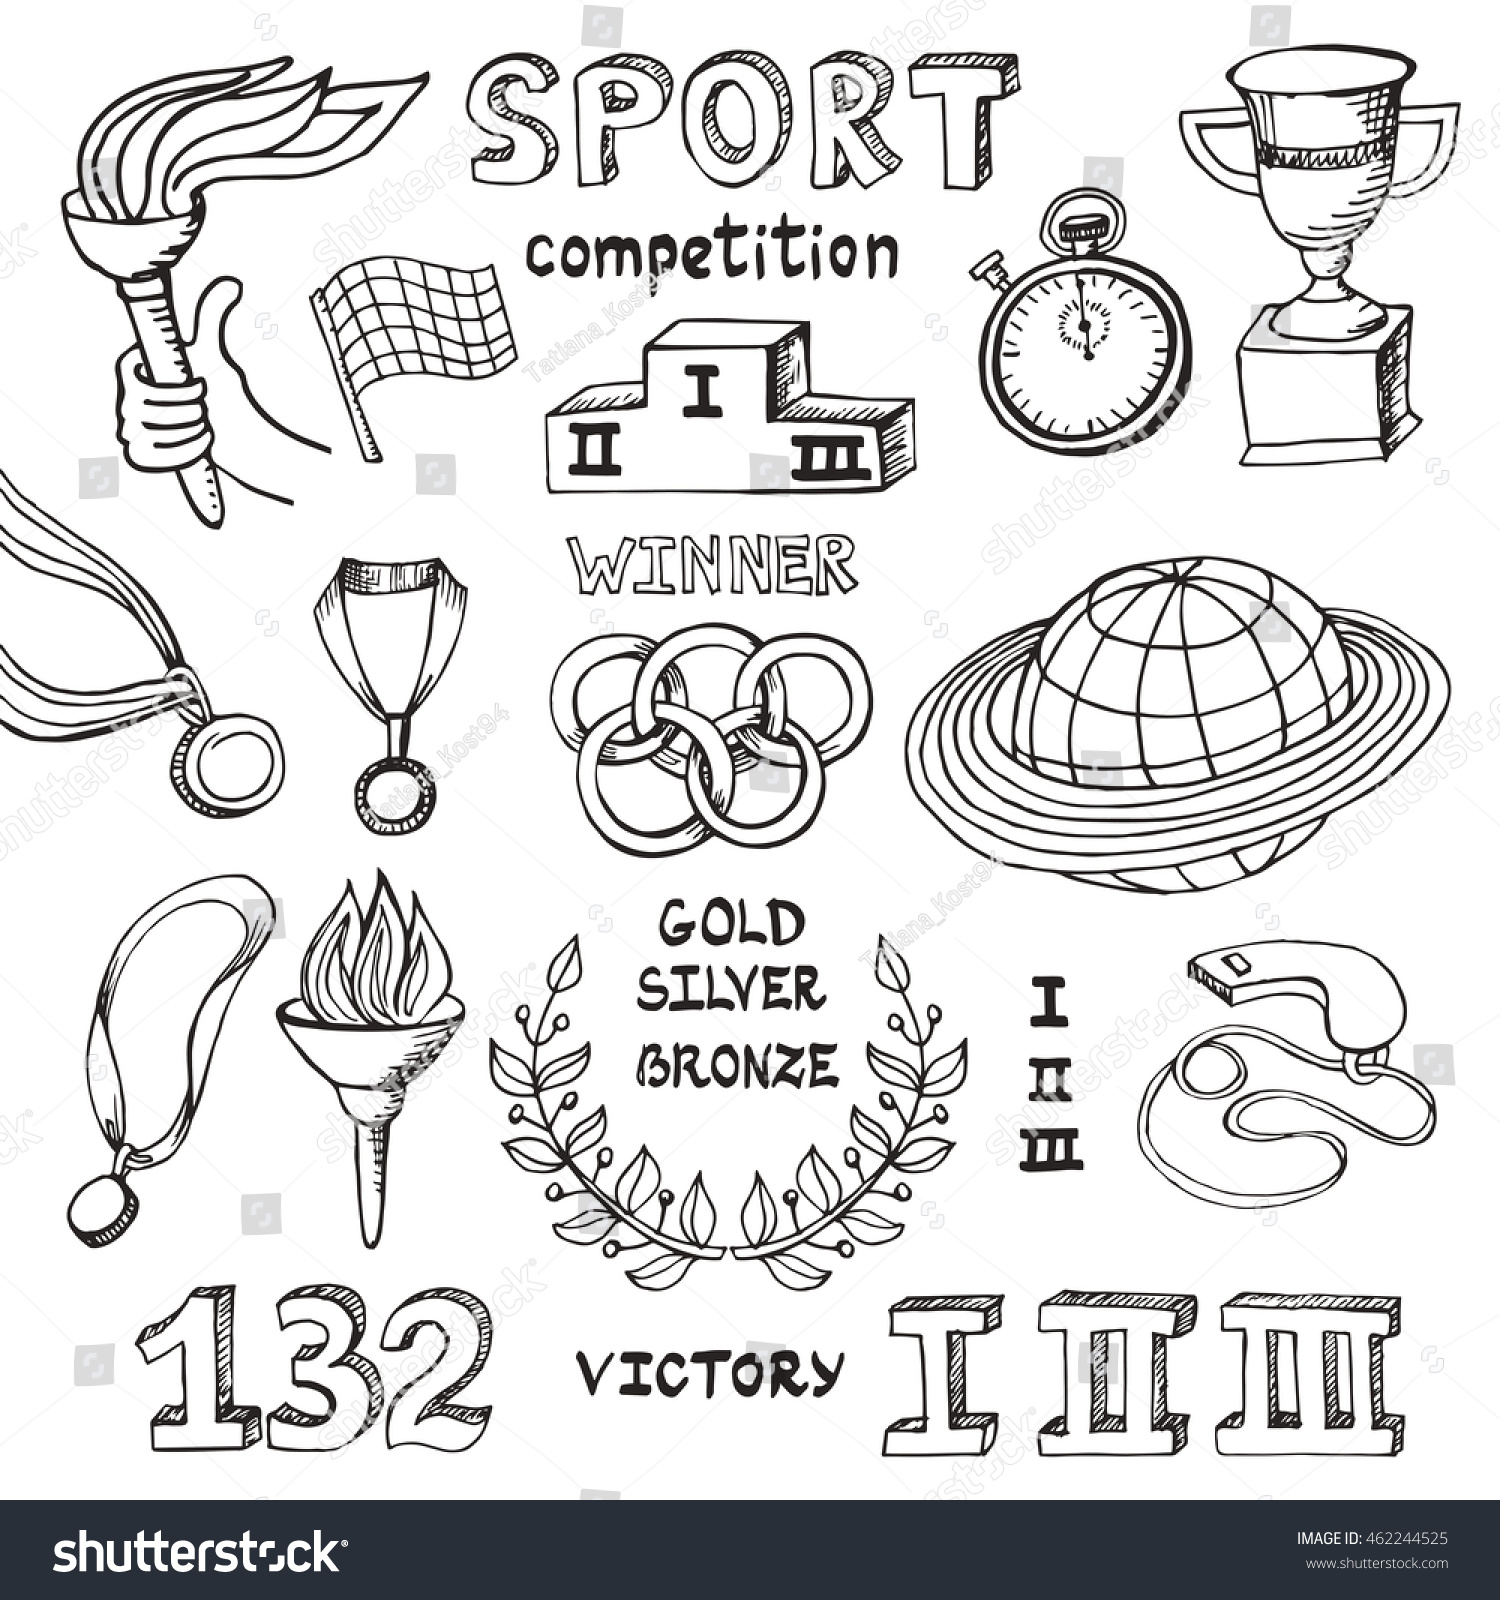 Sport Doodle Elements Winner Competition Set Hand Stock Illustration